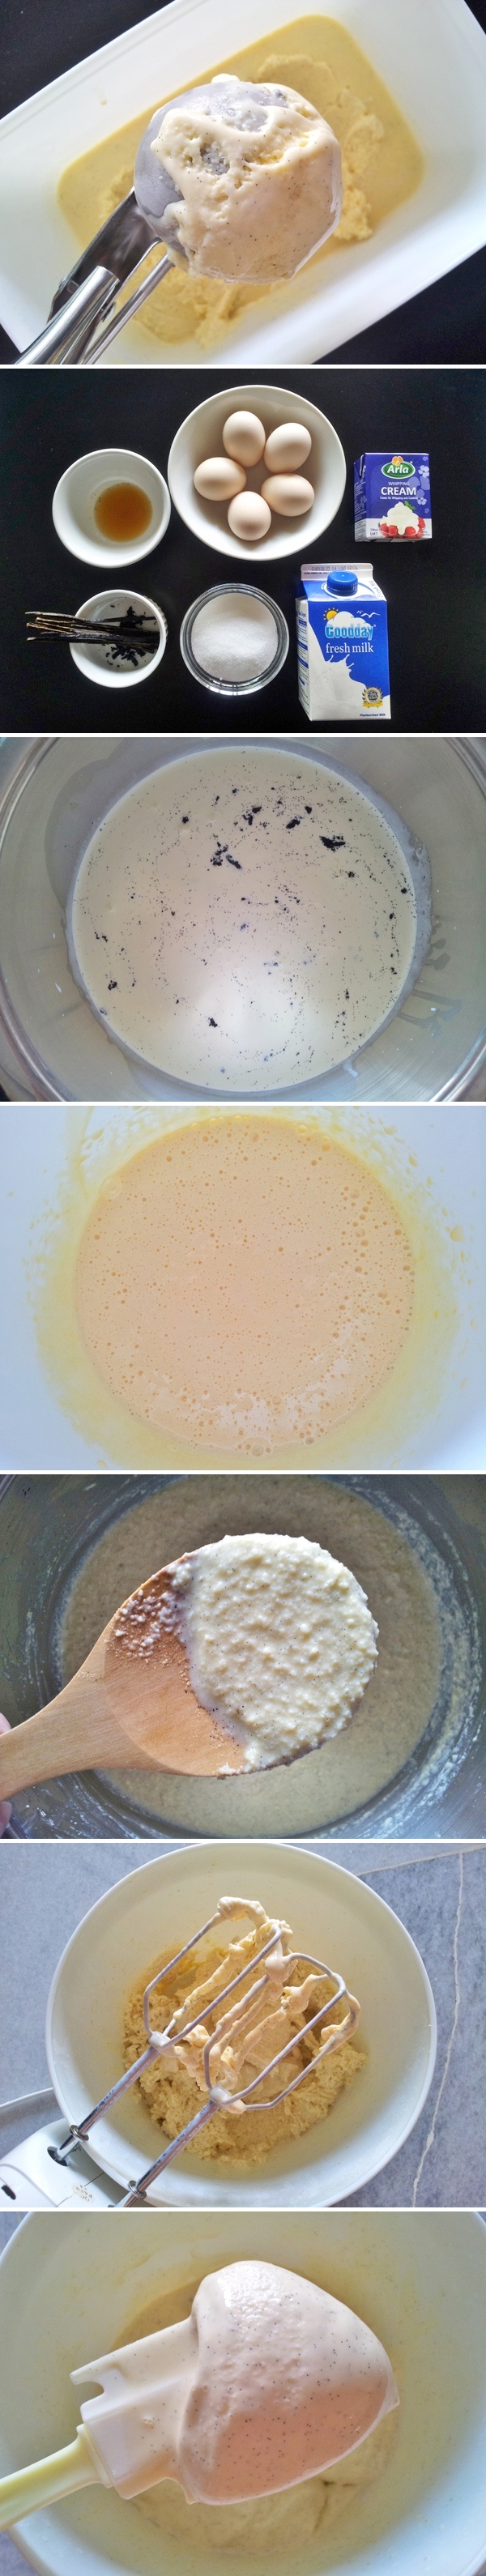 How to make Vanilla Ice Cream